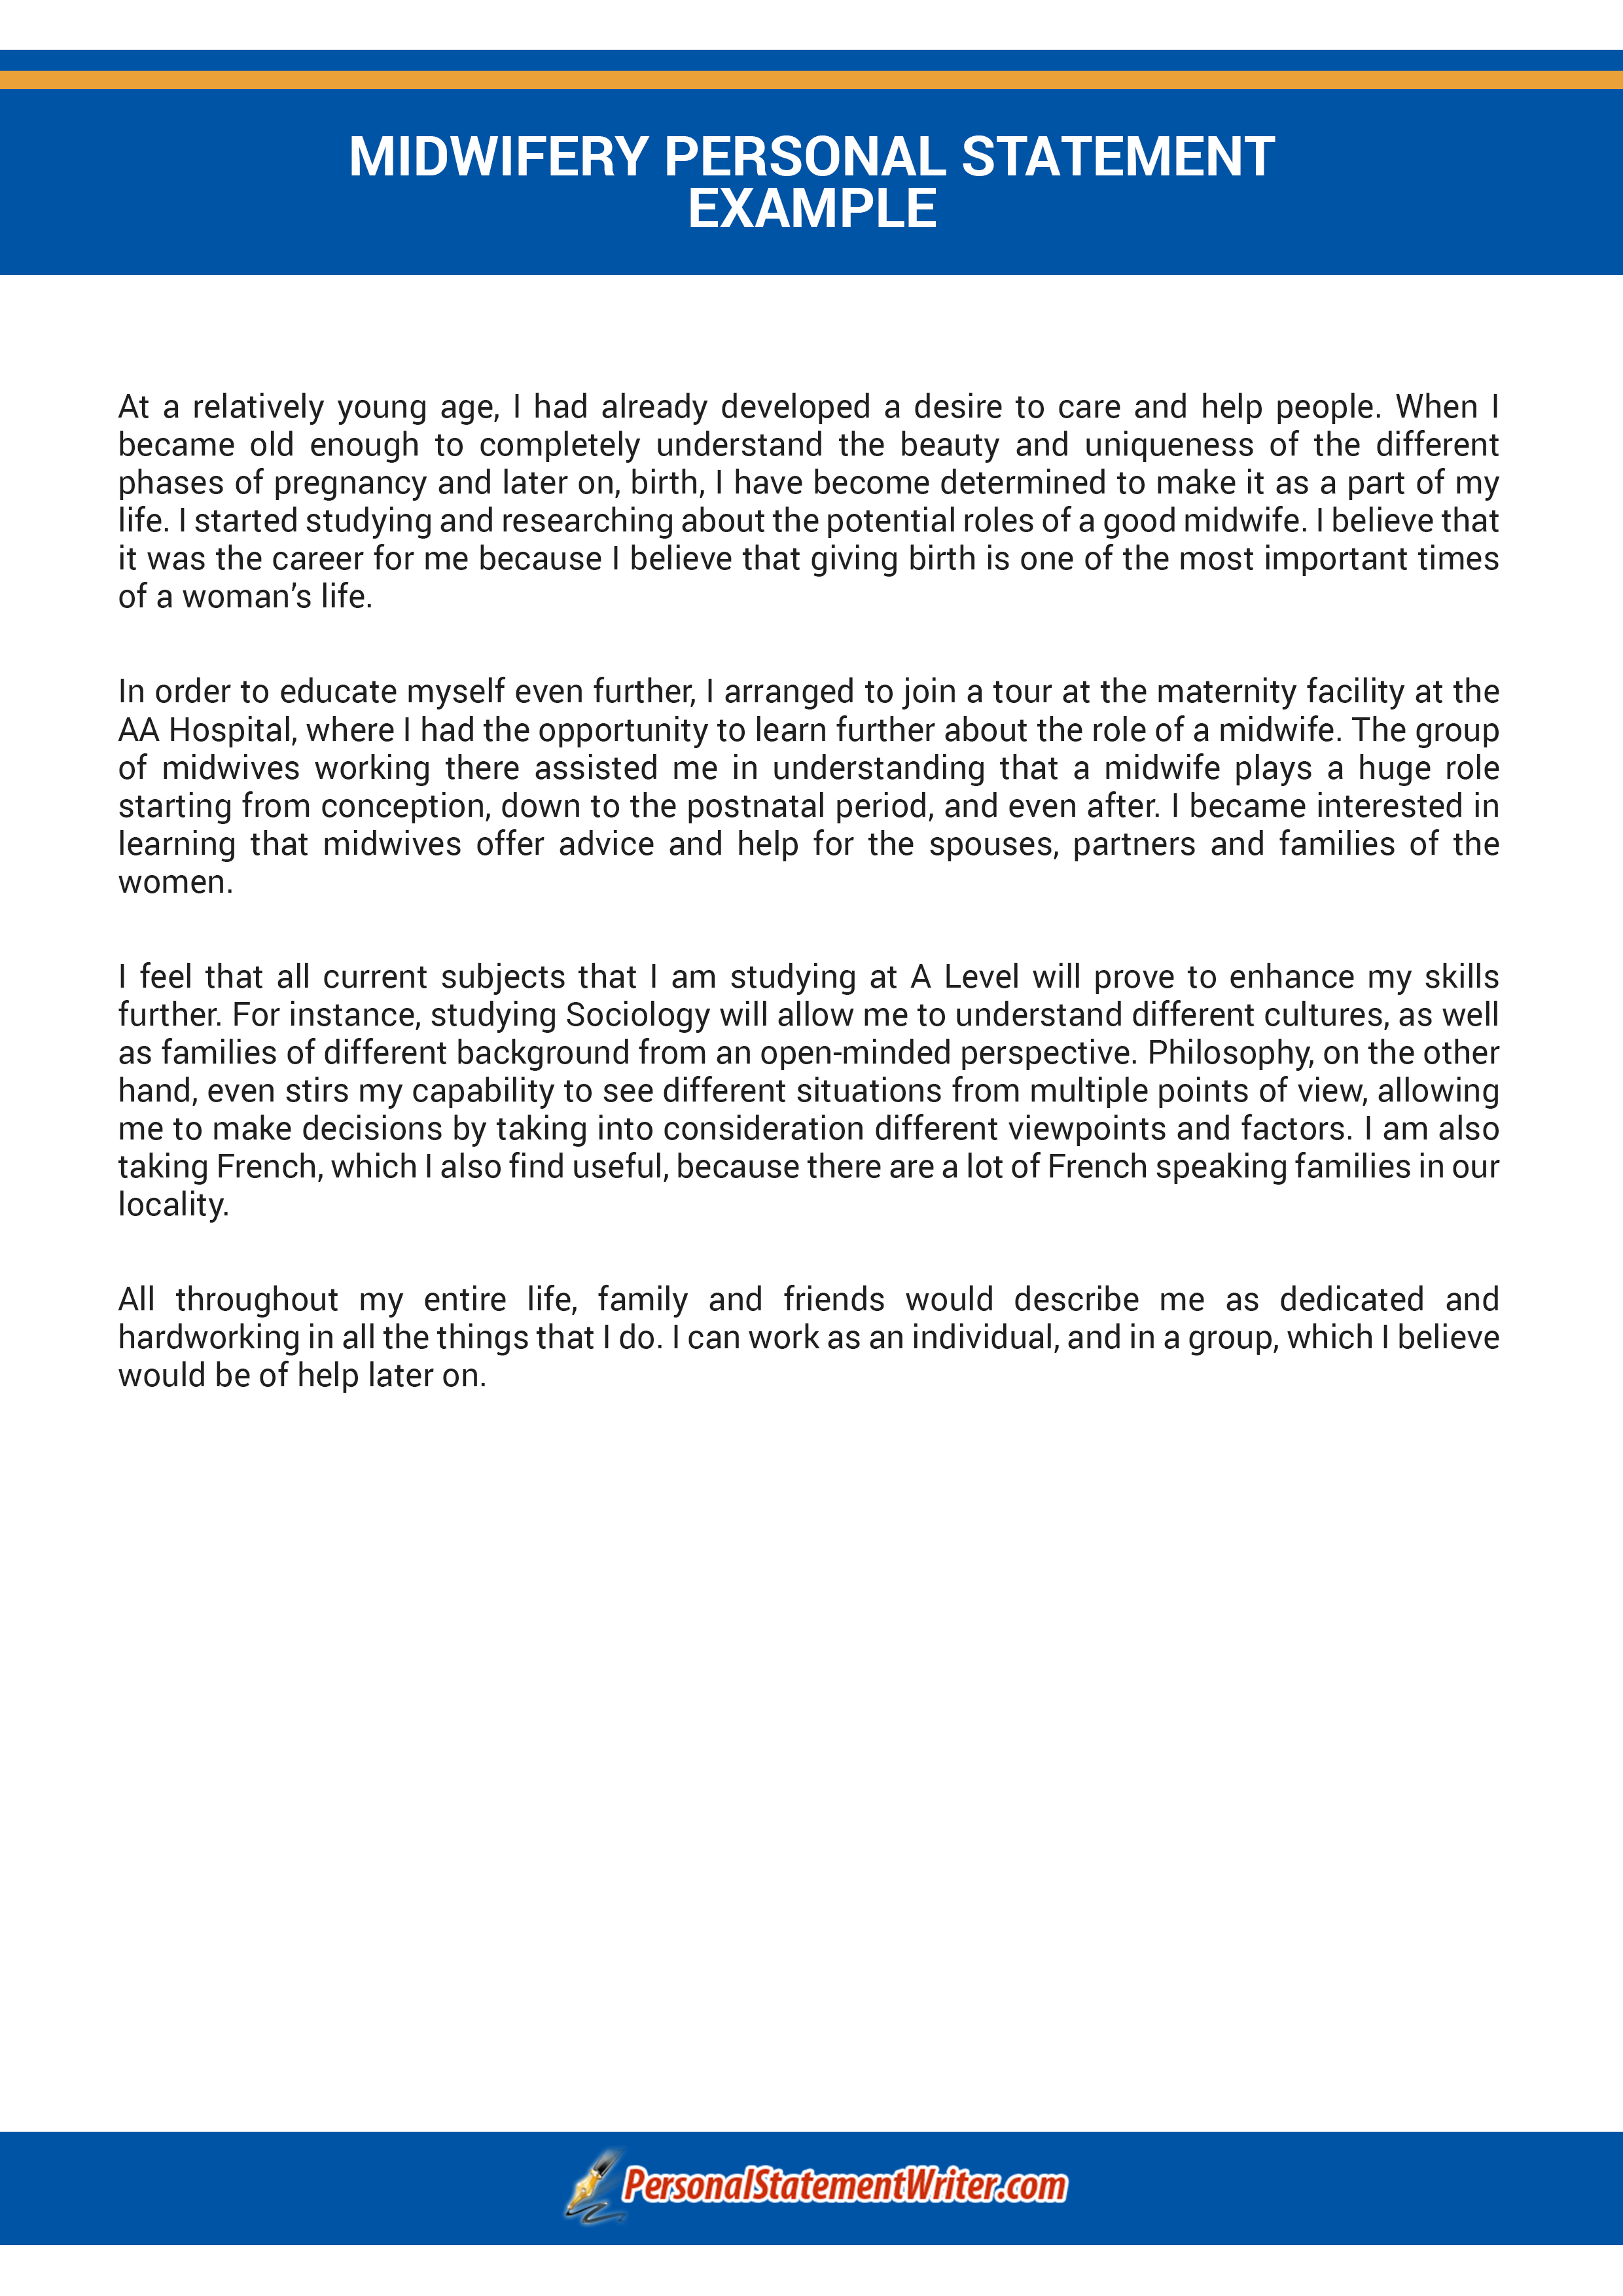 midwifery personal statement for university